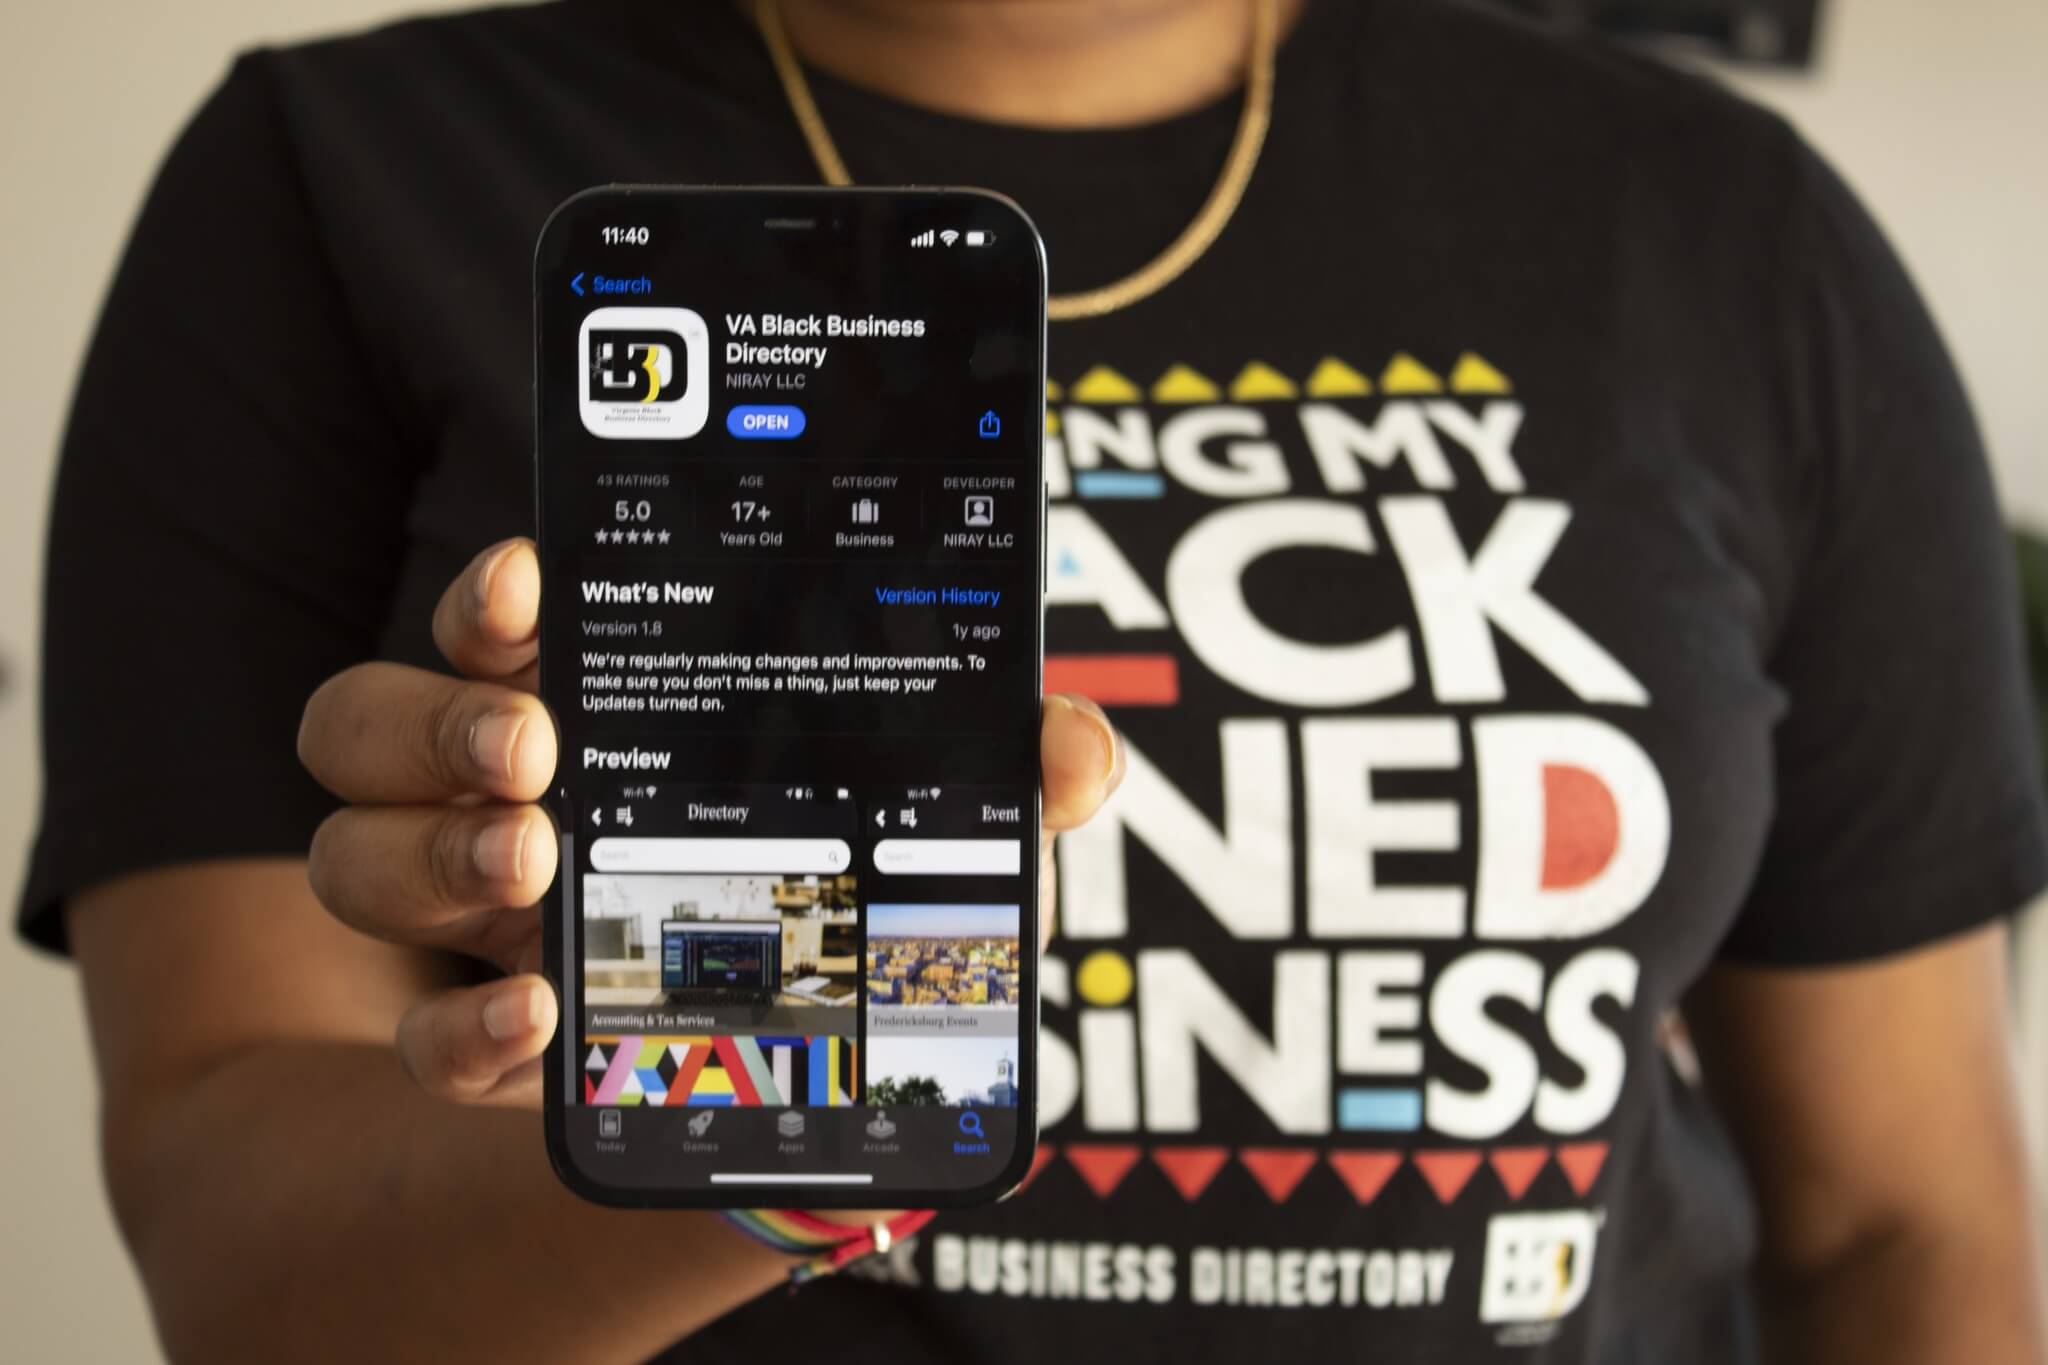 Virginia Black Business Directory